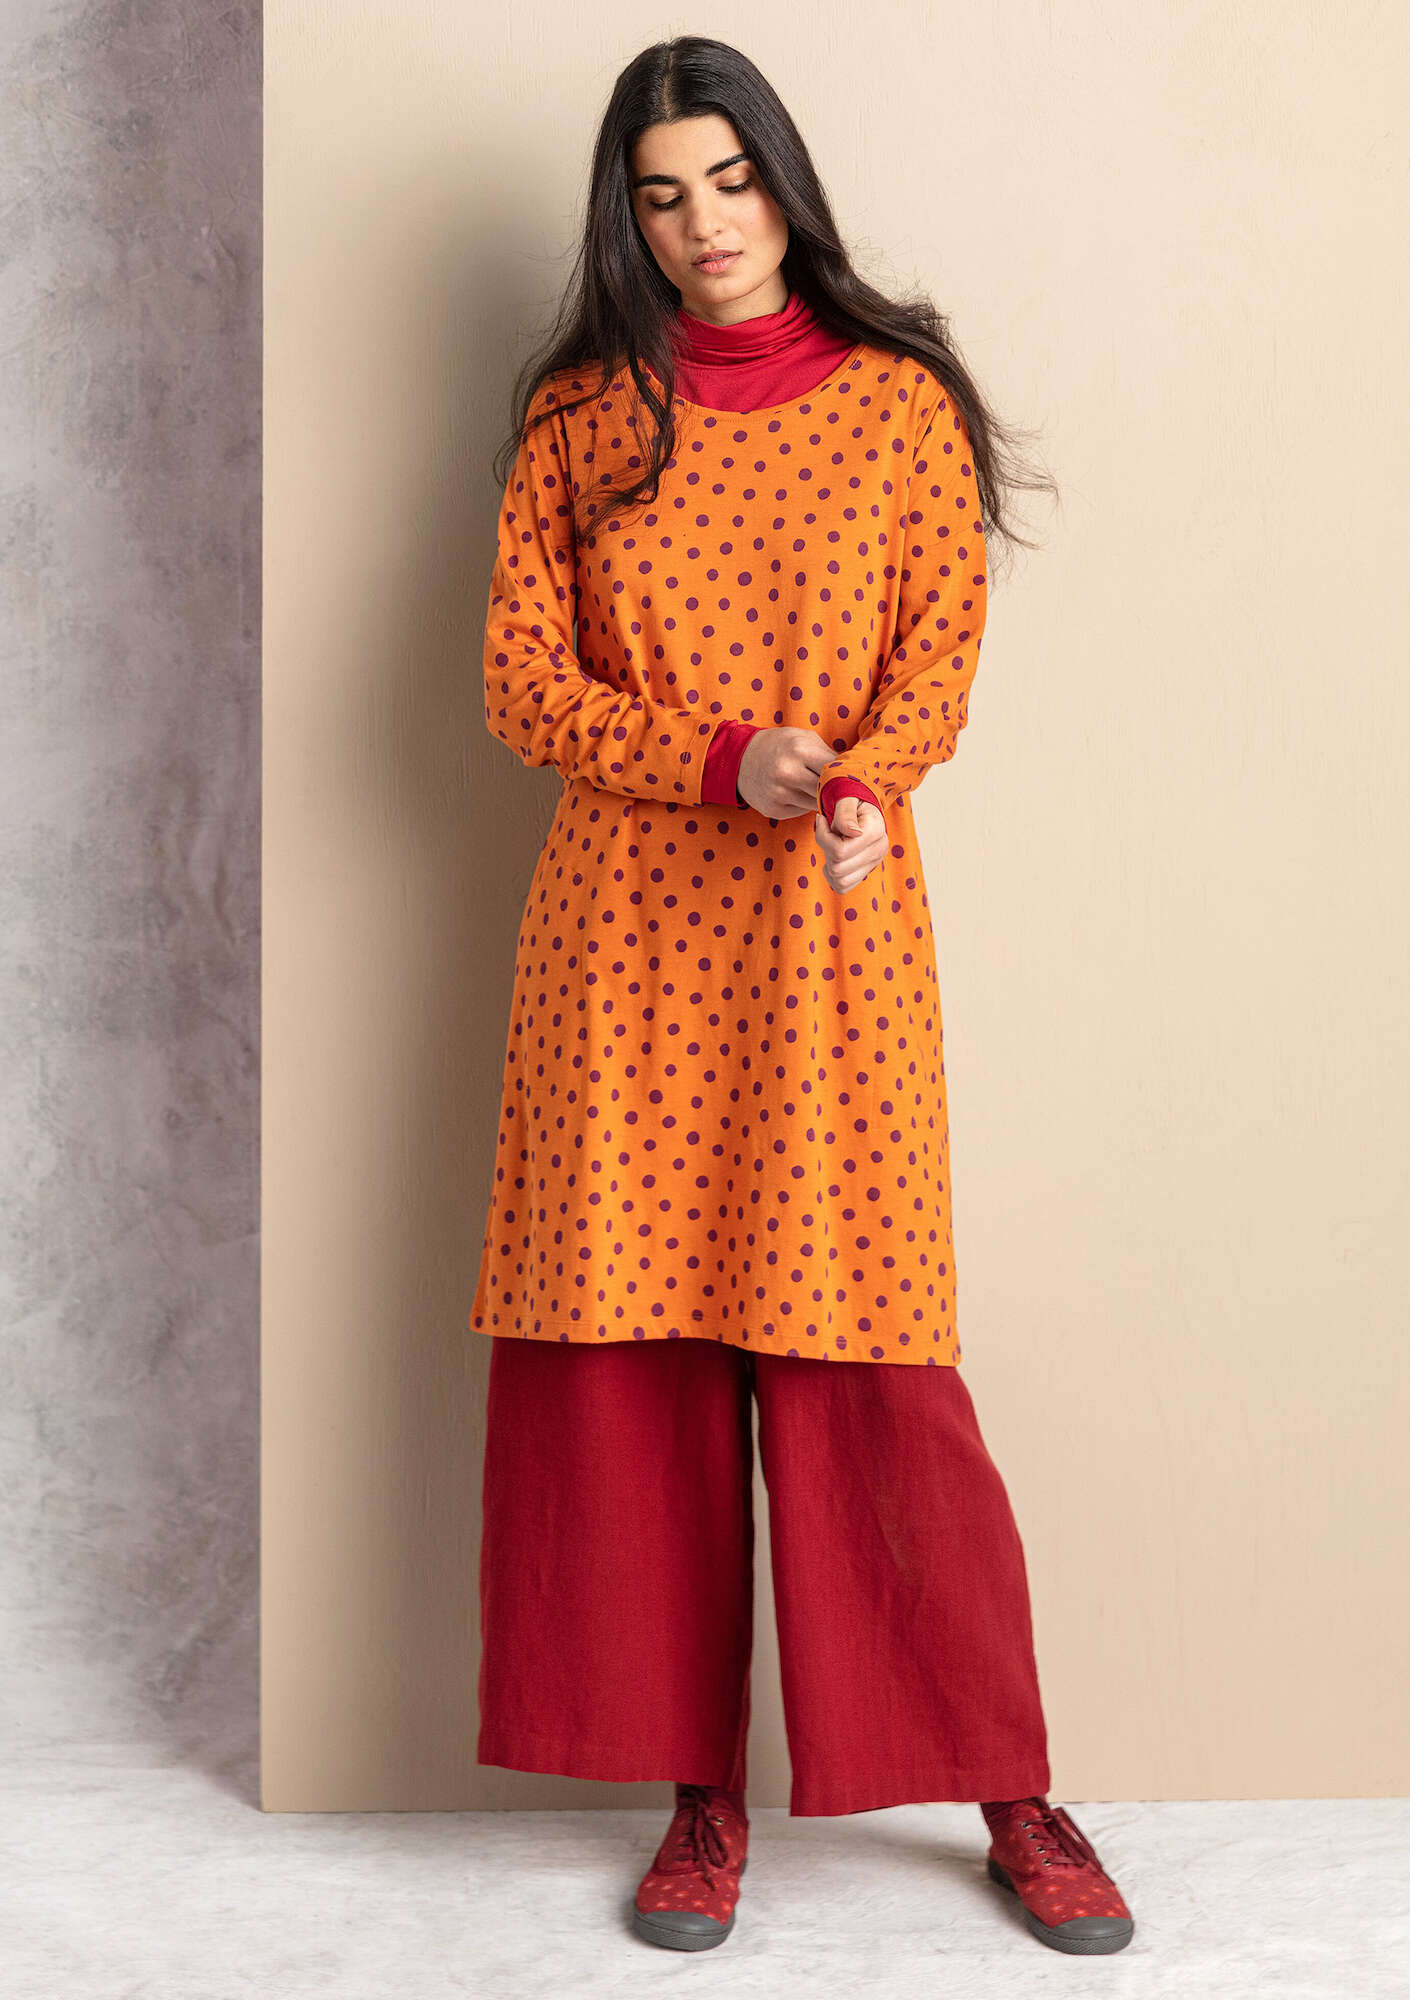 “Juliet” jersey tunic in organic cotton/modal burnt orange/patterned